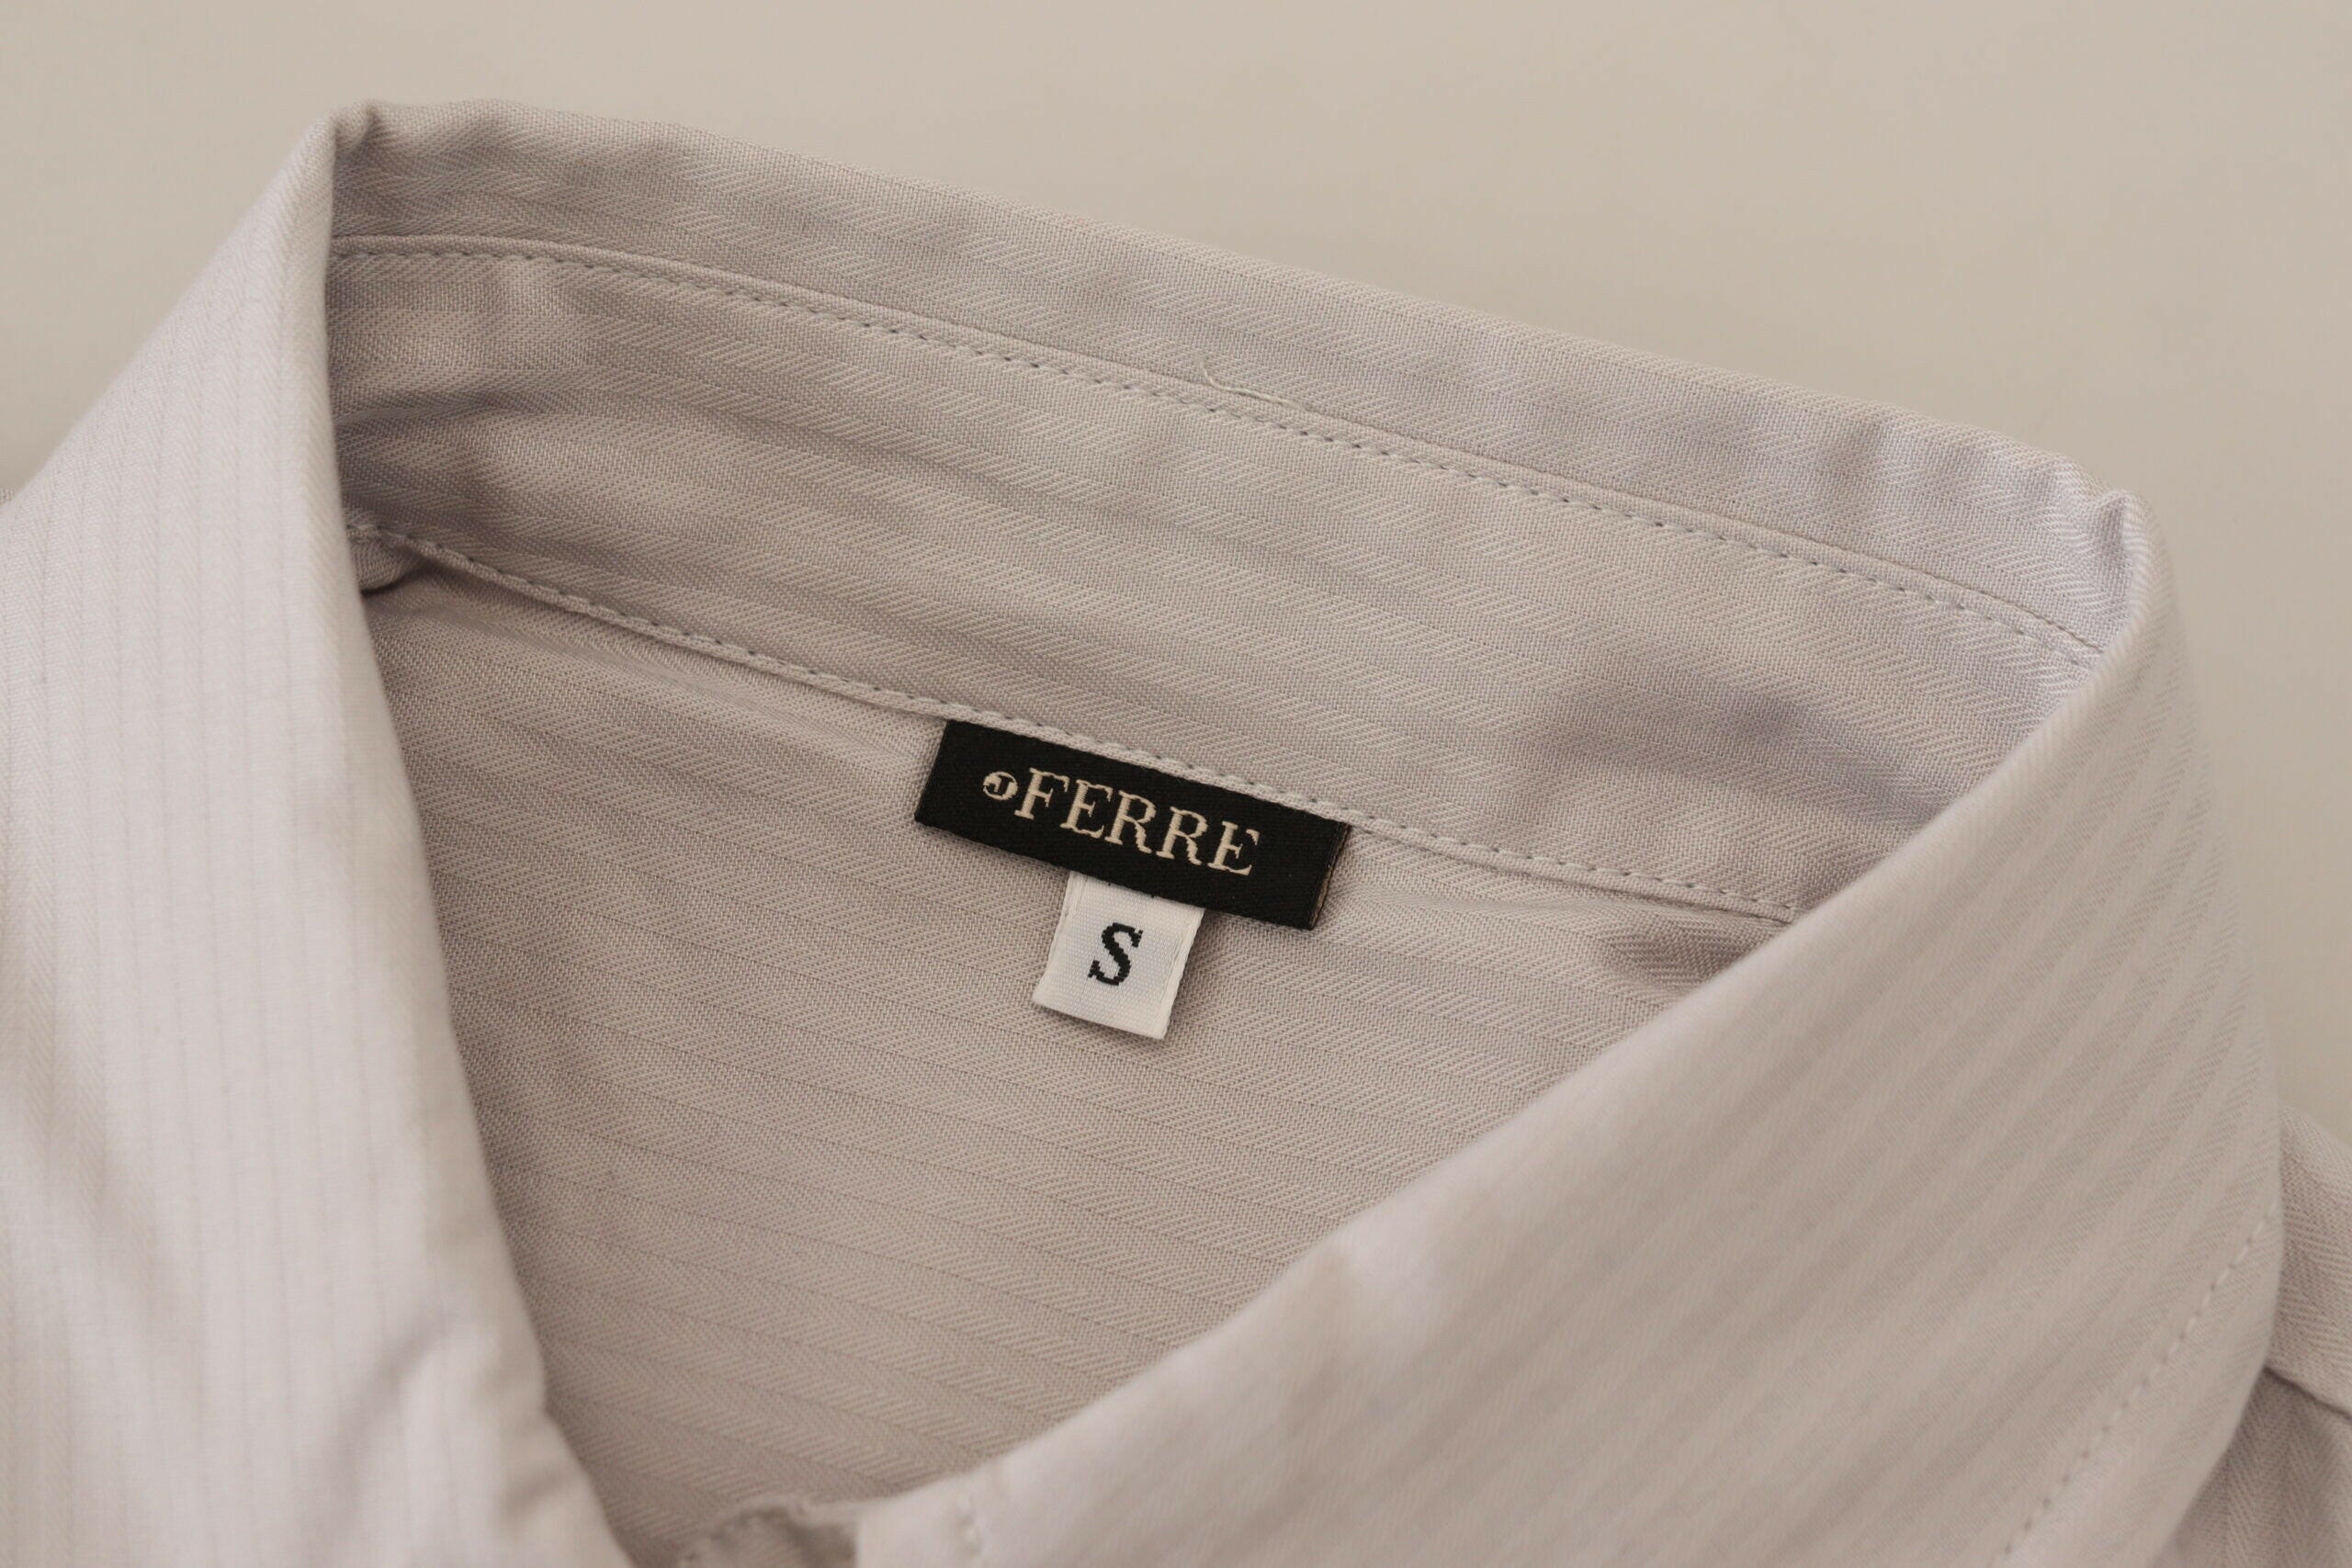 Ferre Light Gray Stripes Cotton Sleeveless Collared Top - GENUINE AUTHENTIC BRAND LLC  